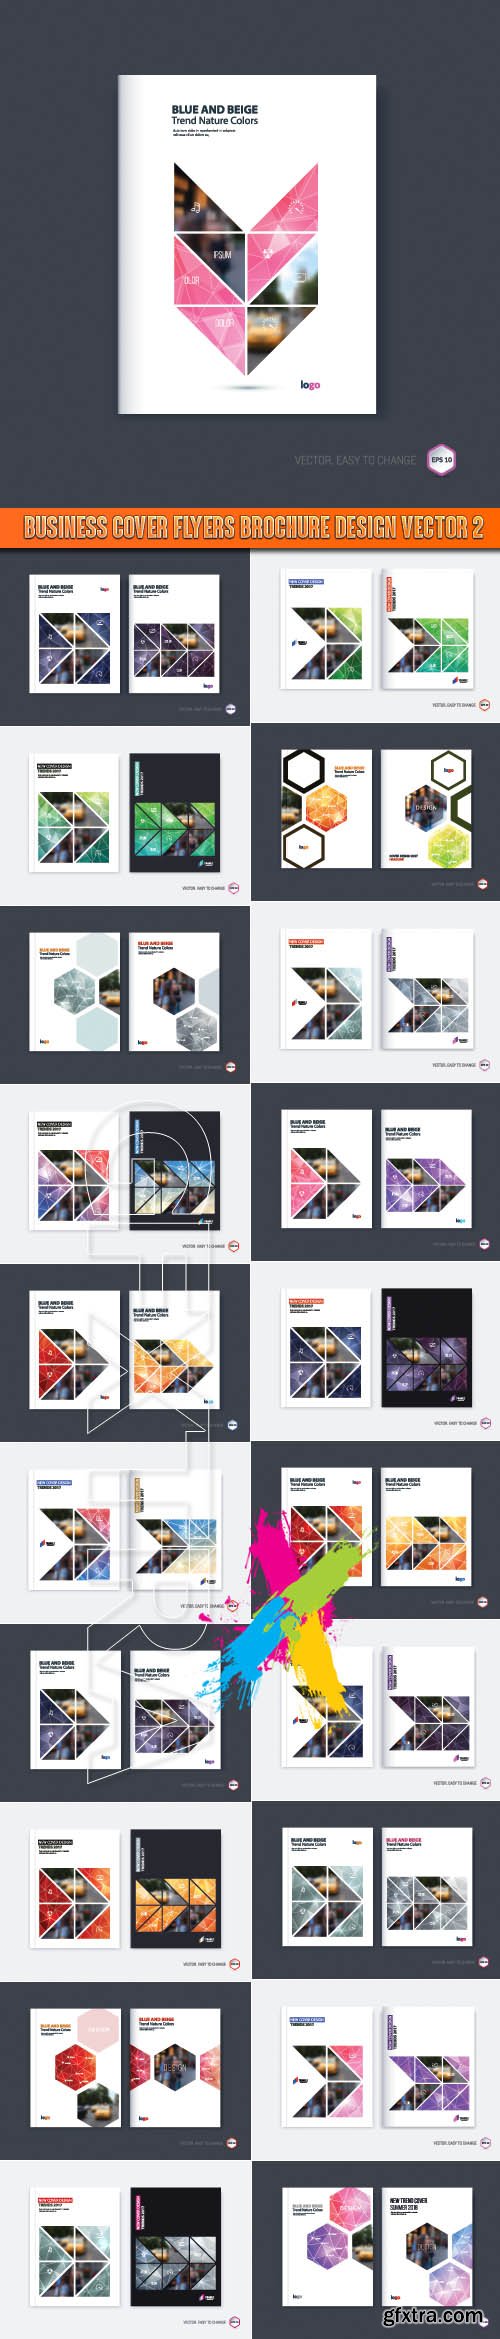 Business cover flyers brochure design vector 2